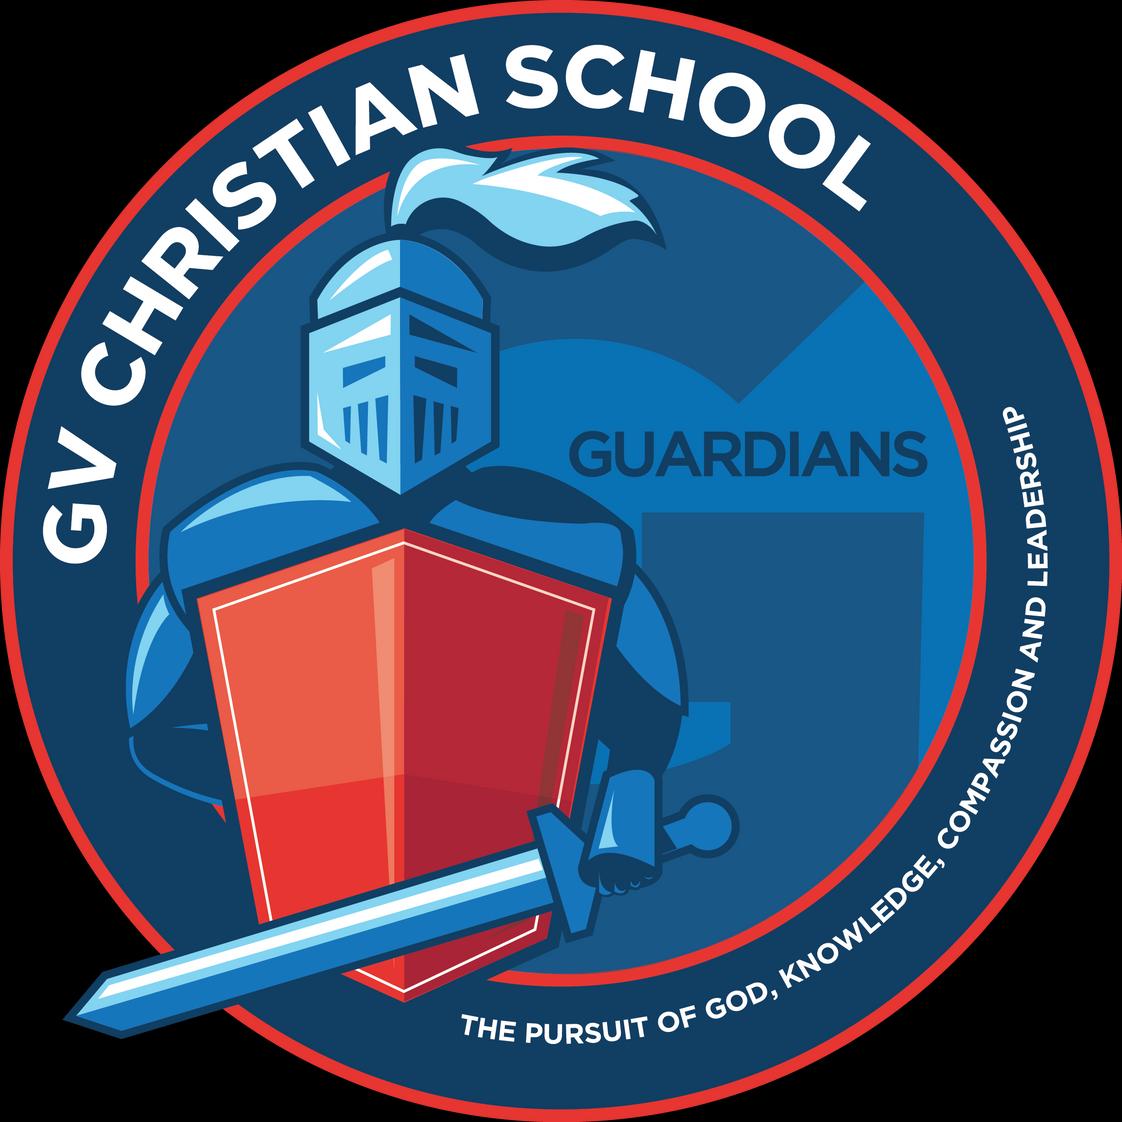 GV Christian School Photo